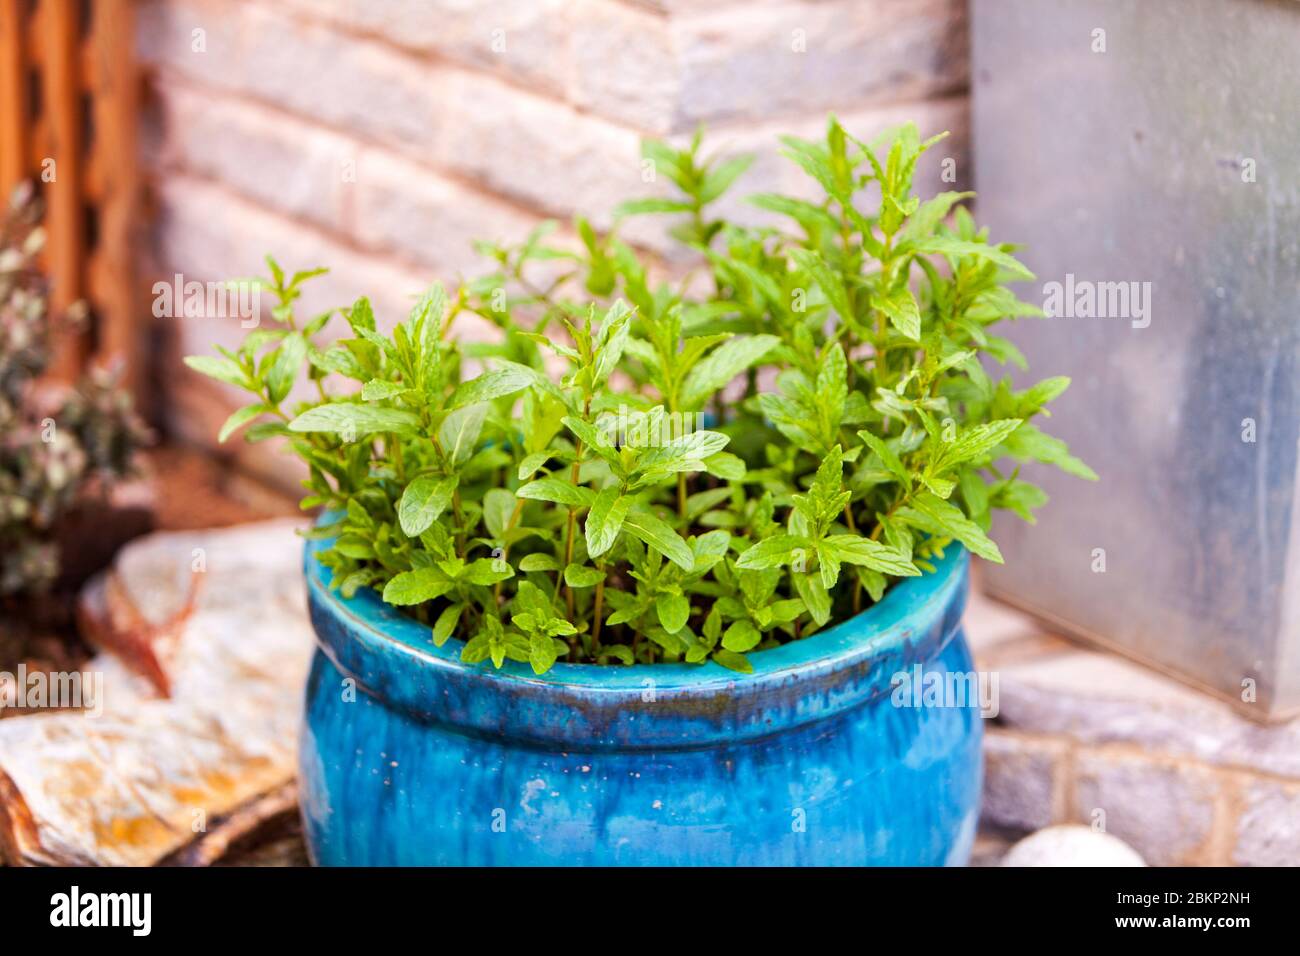 Spearmint, garden mint, common mint, lamb mint mackerel mint, species of mint, Mentha spicata, mint plant, plant, garden mint plant, garden mint pot Stock Photo